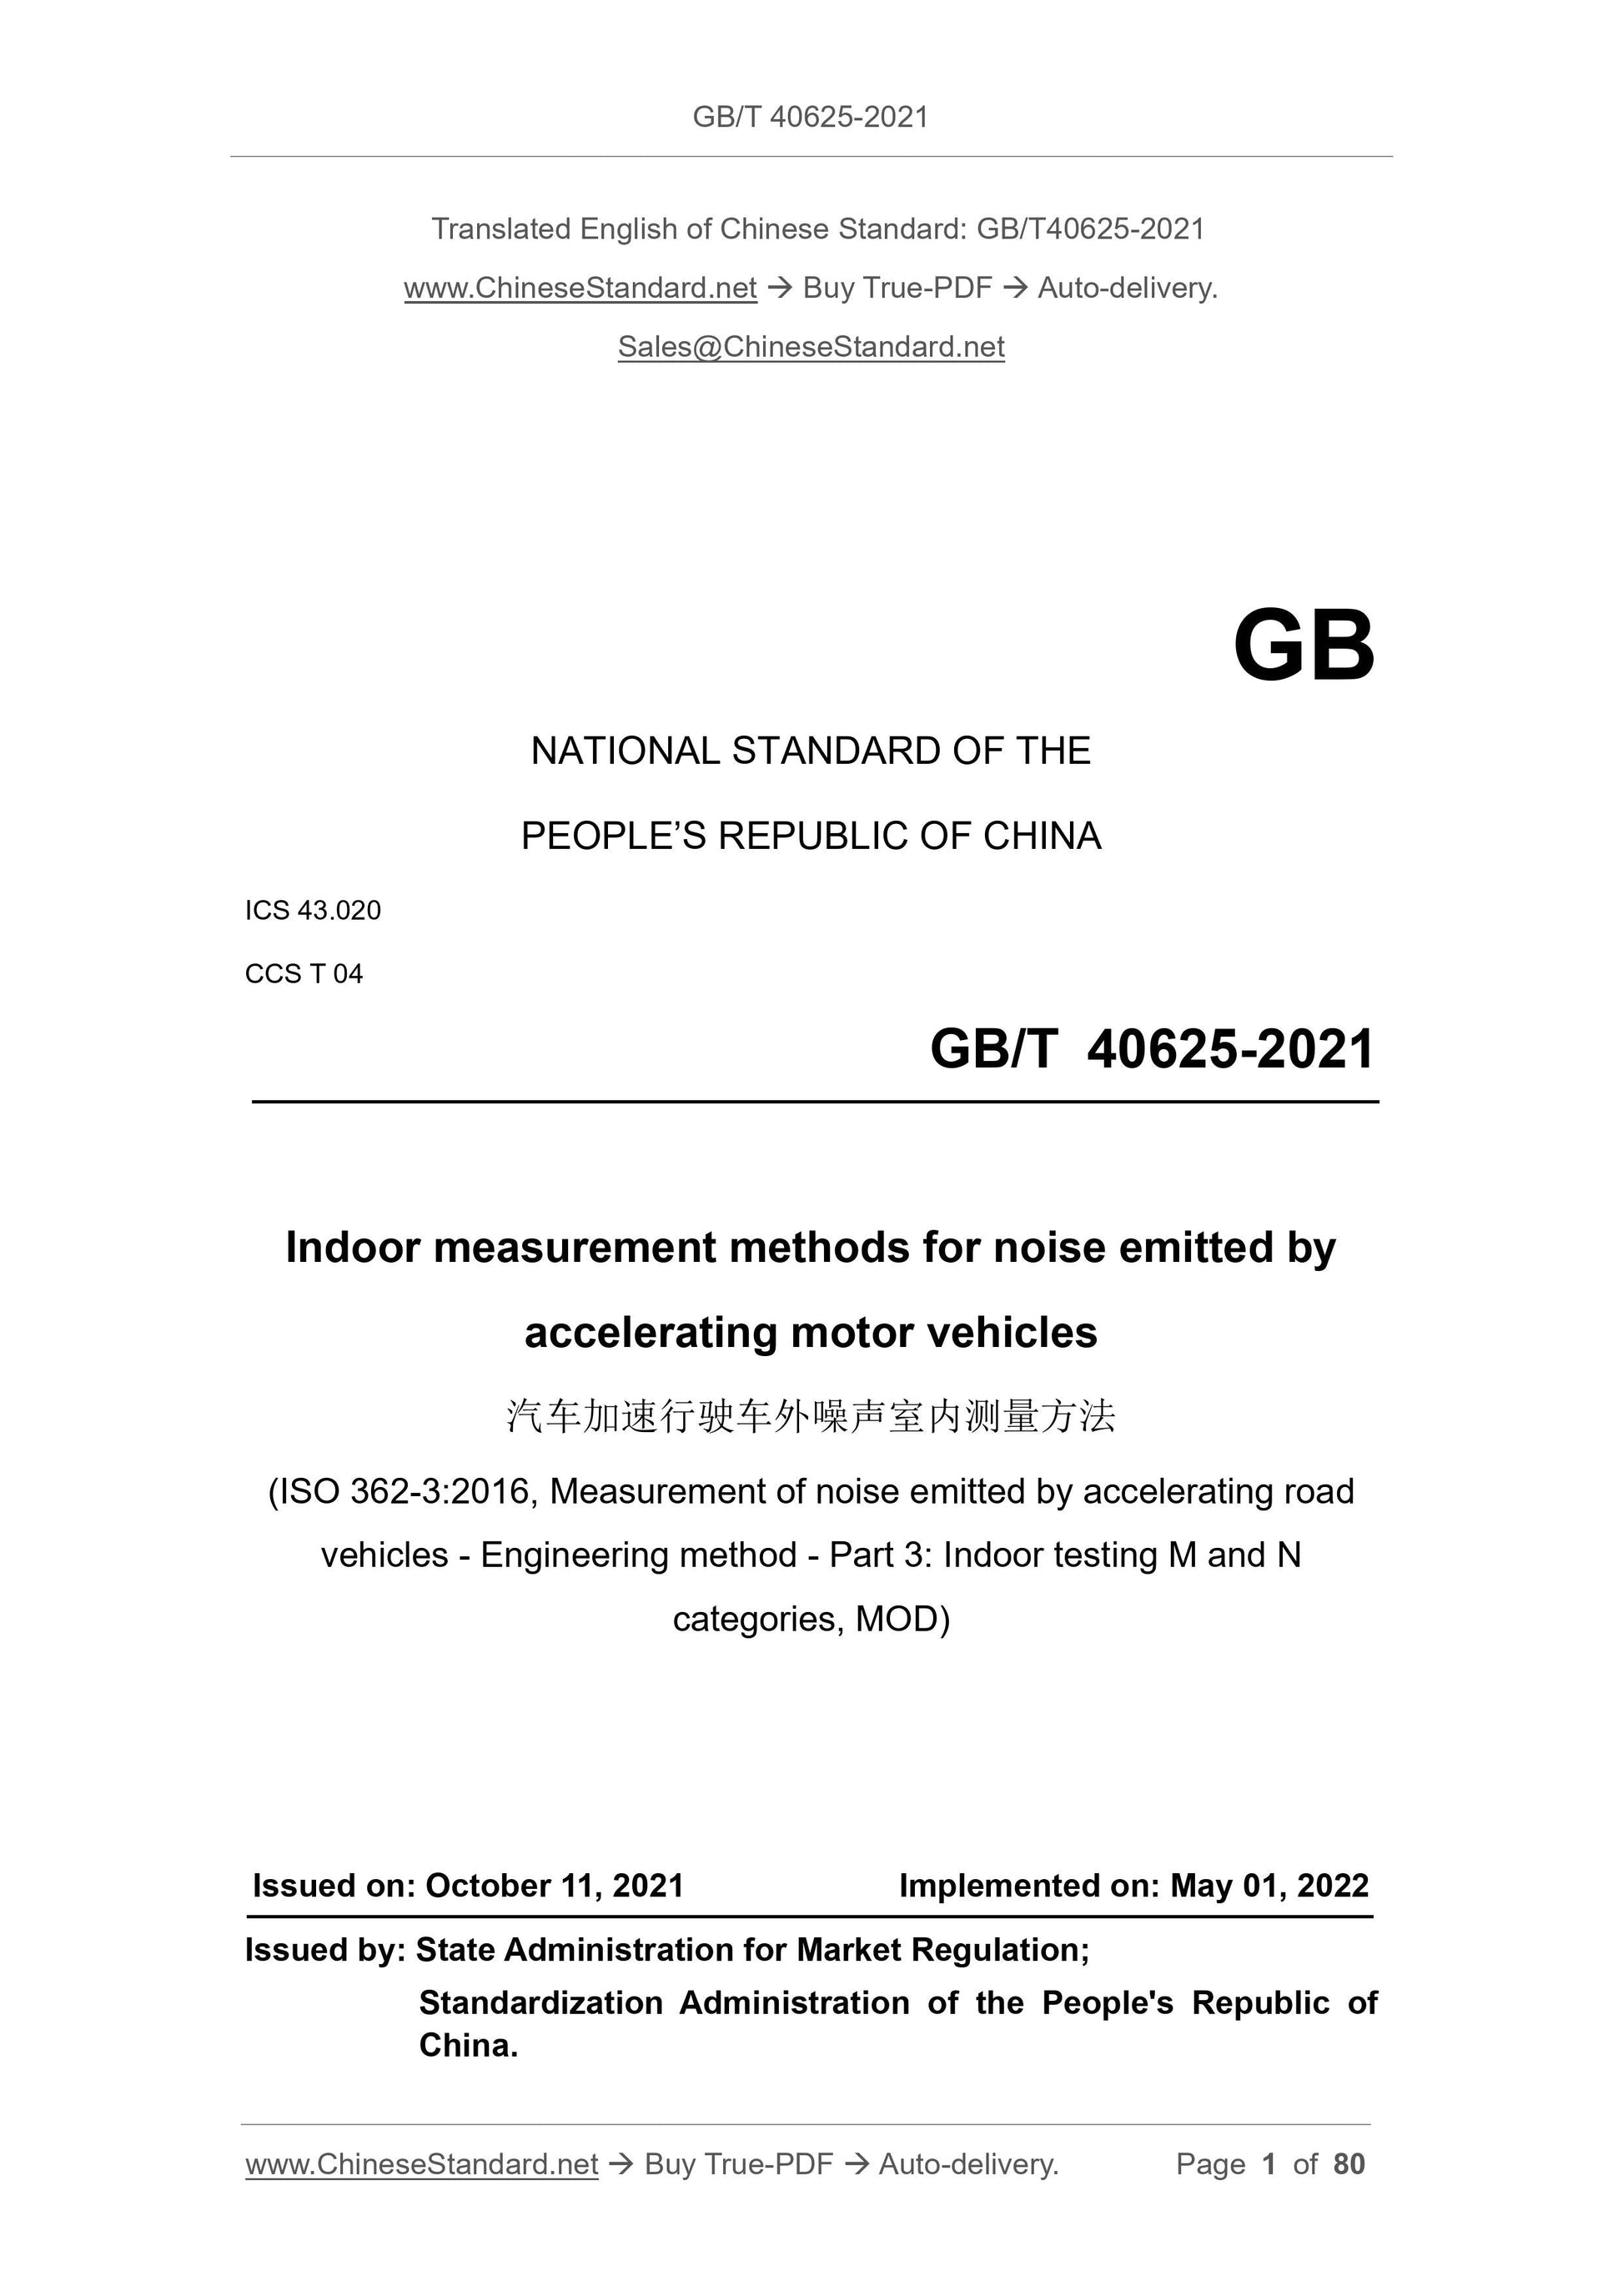 GBT40625-2021 Page 1